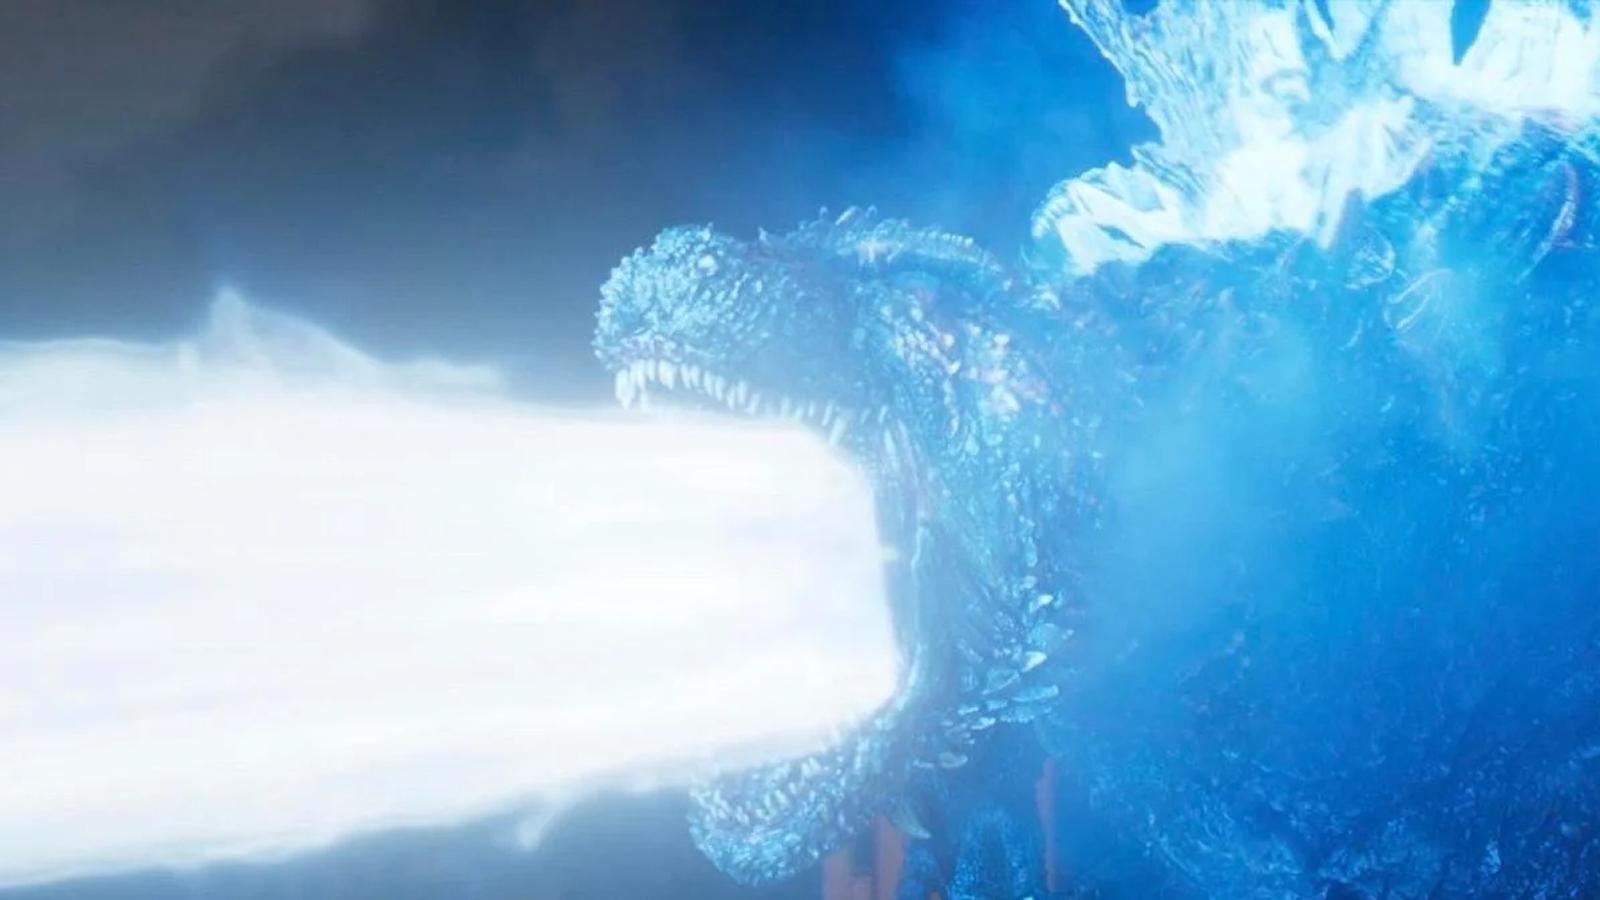 Godzilla's atomic breath in Godzilla Minus One